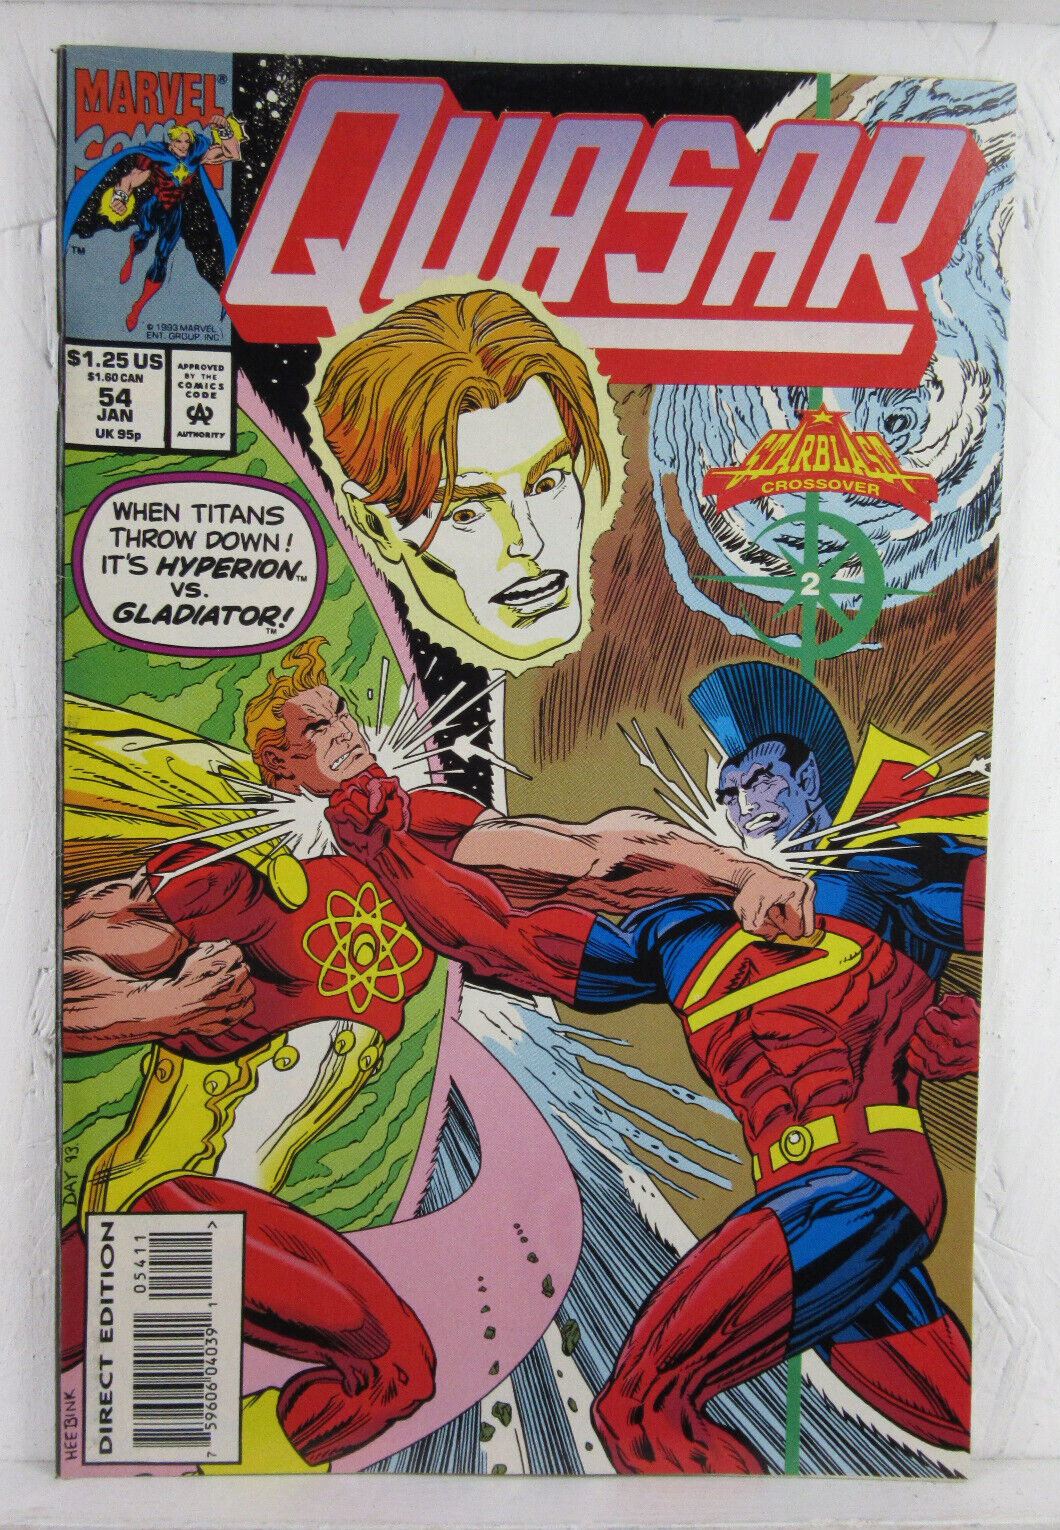 QUASAR #59 * Marvel Comics * 1994 - Starblazer Hyperion